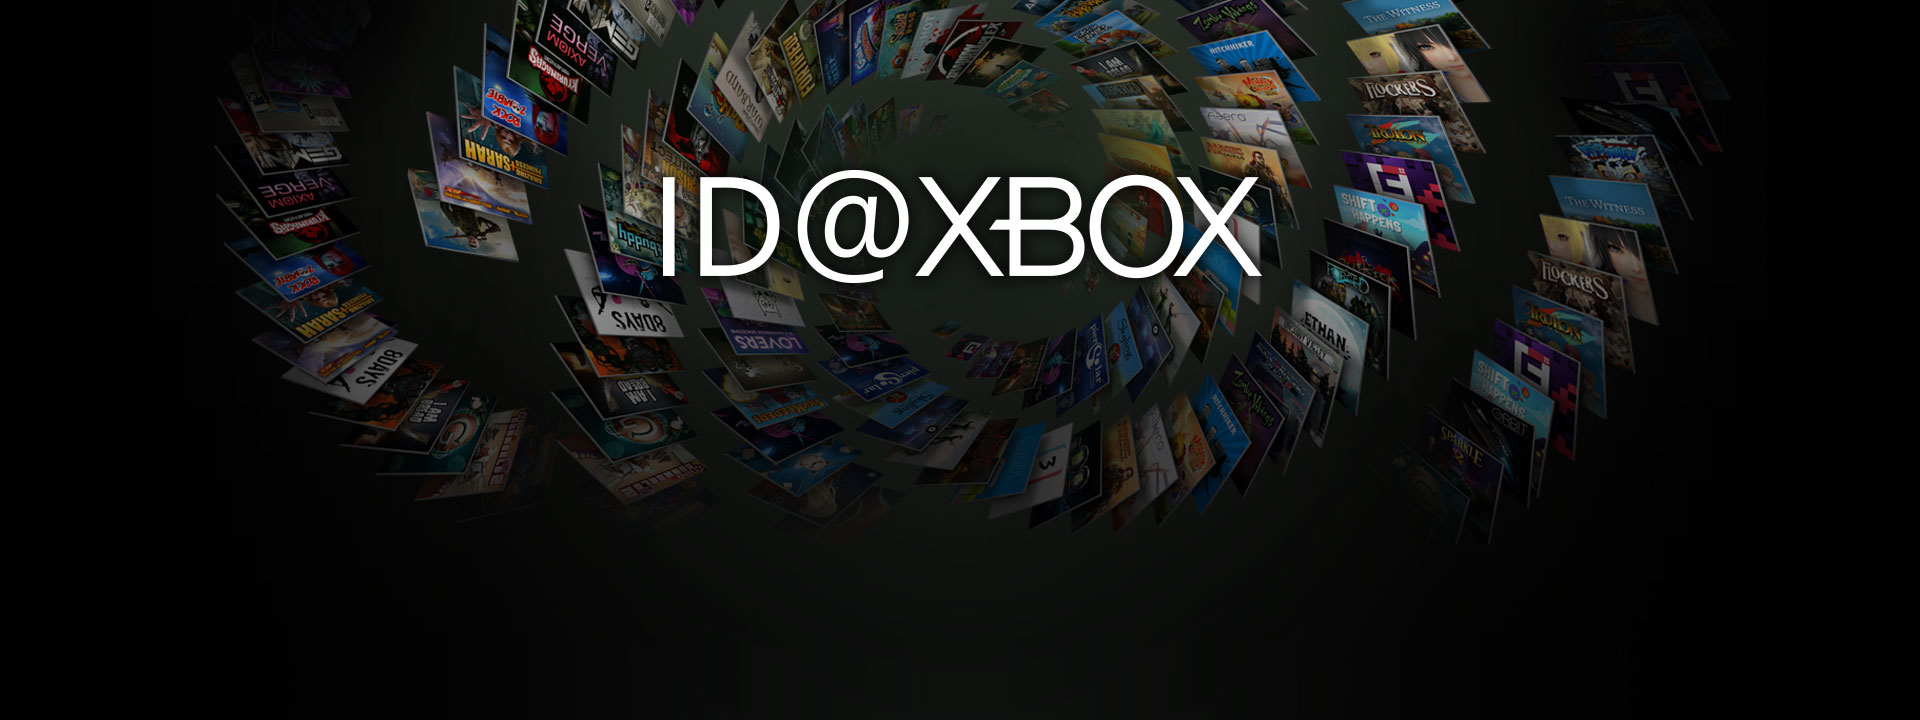 Логотип ID@Xbox перед серией обложек игр от ID